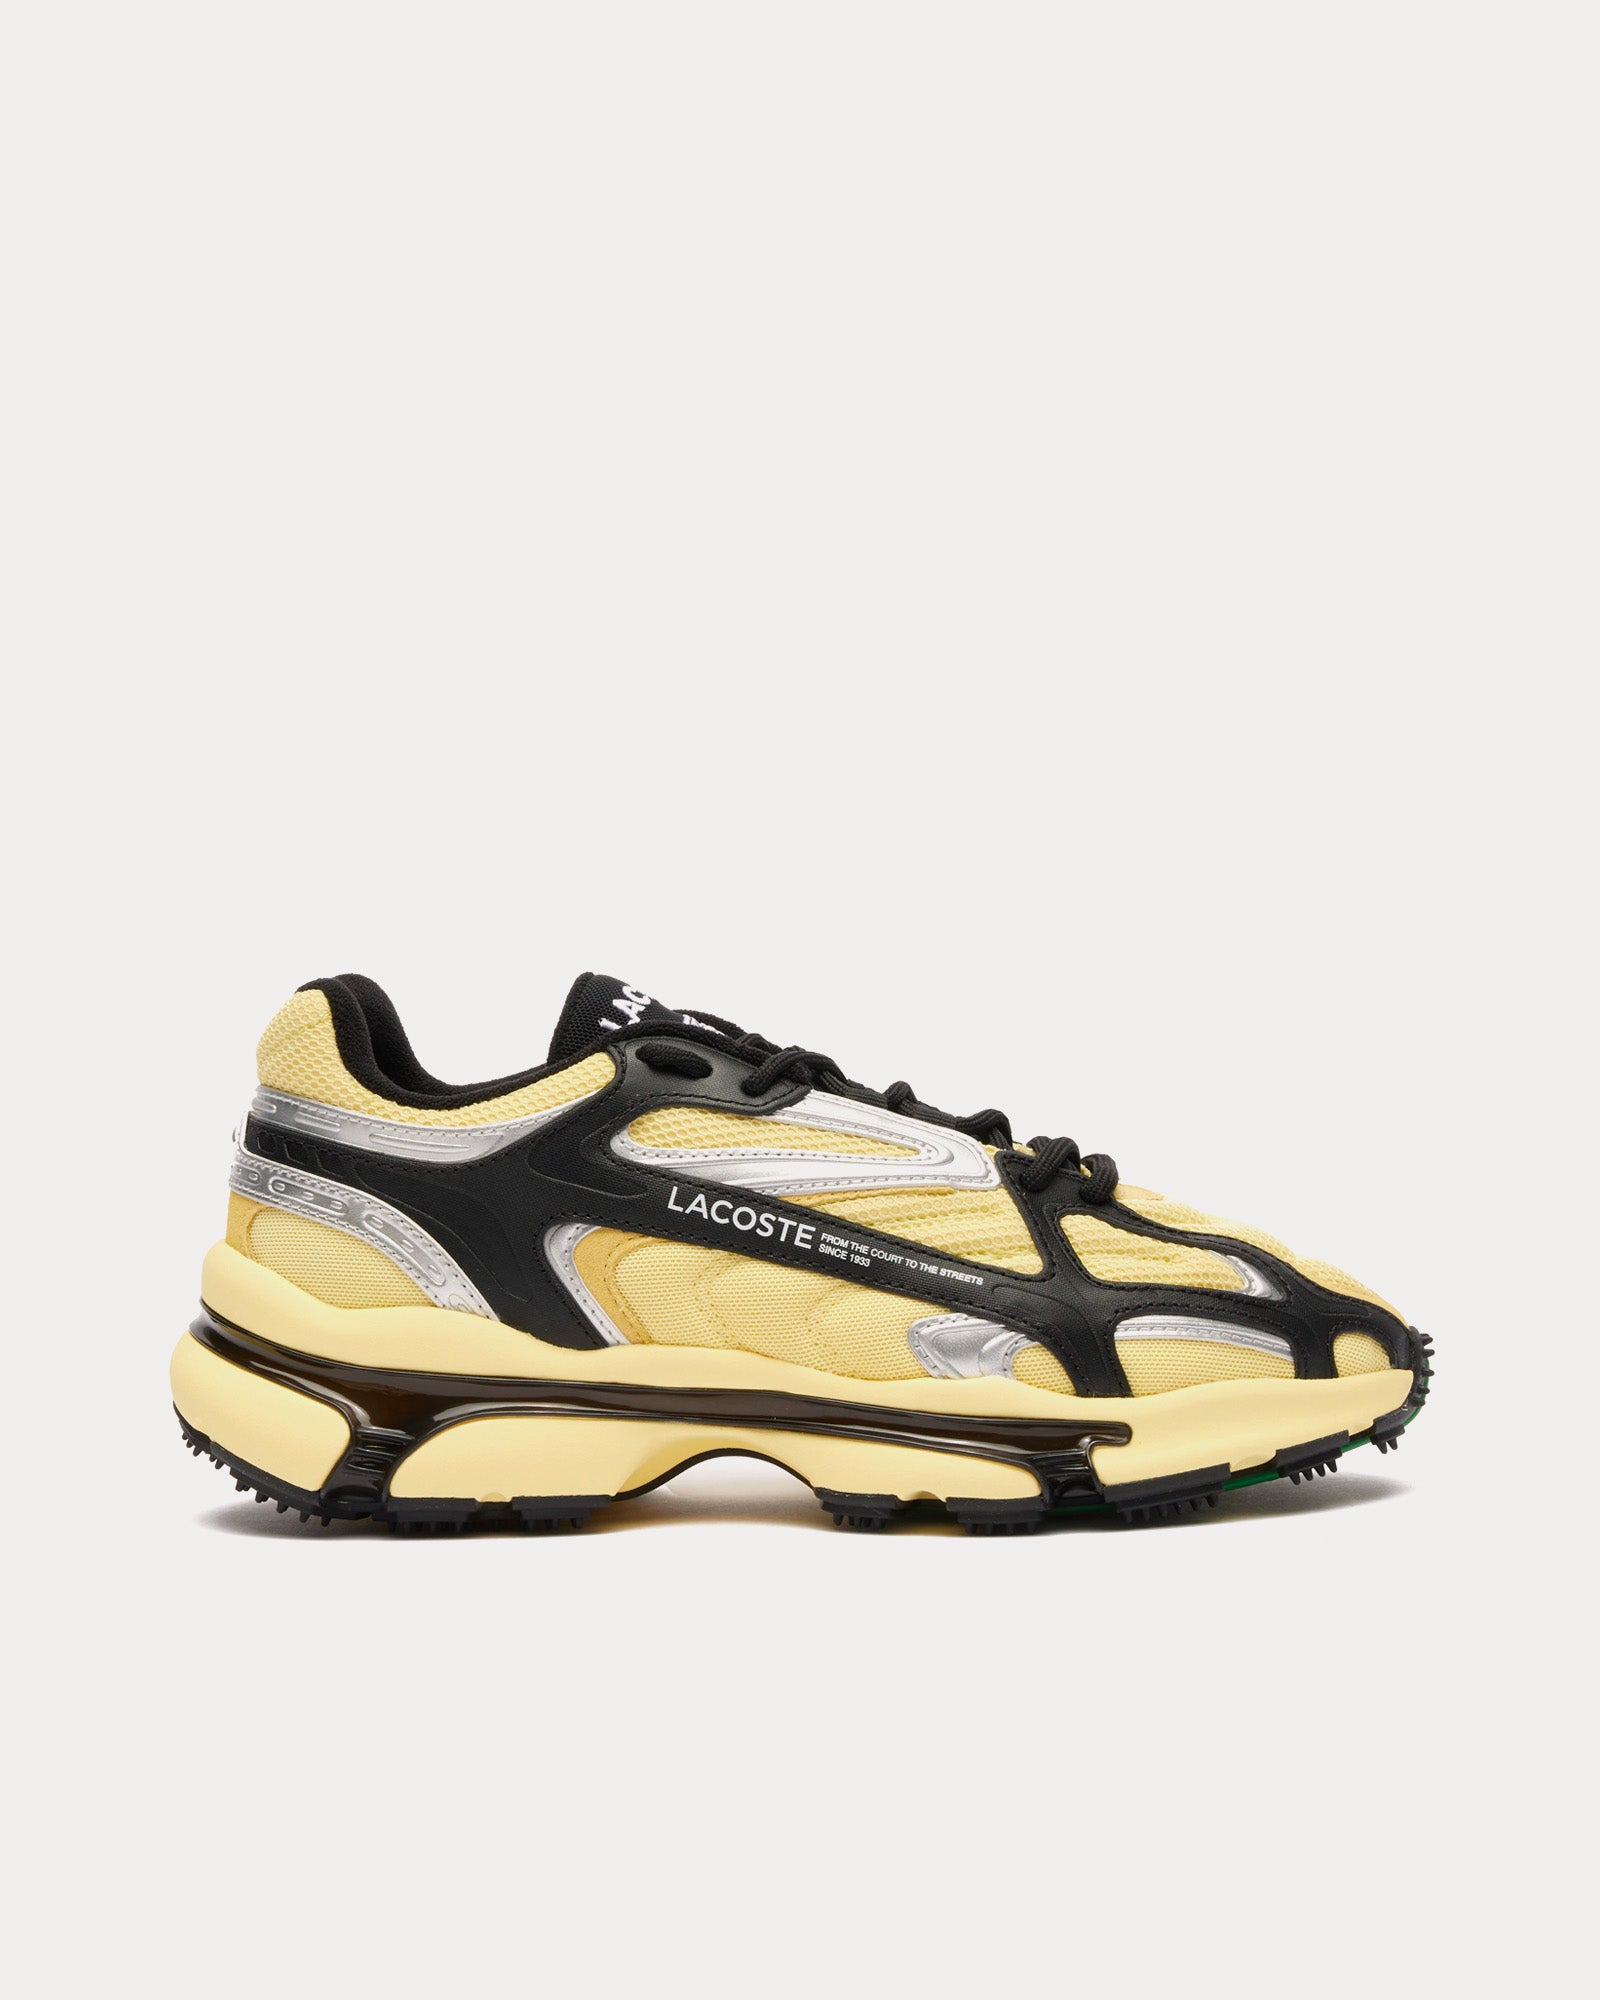 Lacoste - L003 2K24 Yellow / Black Low Top Sneakers